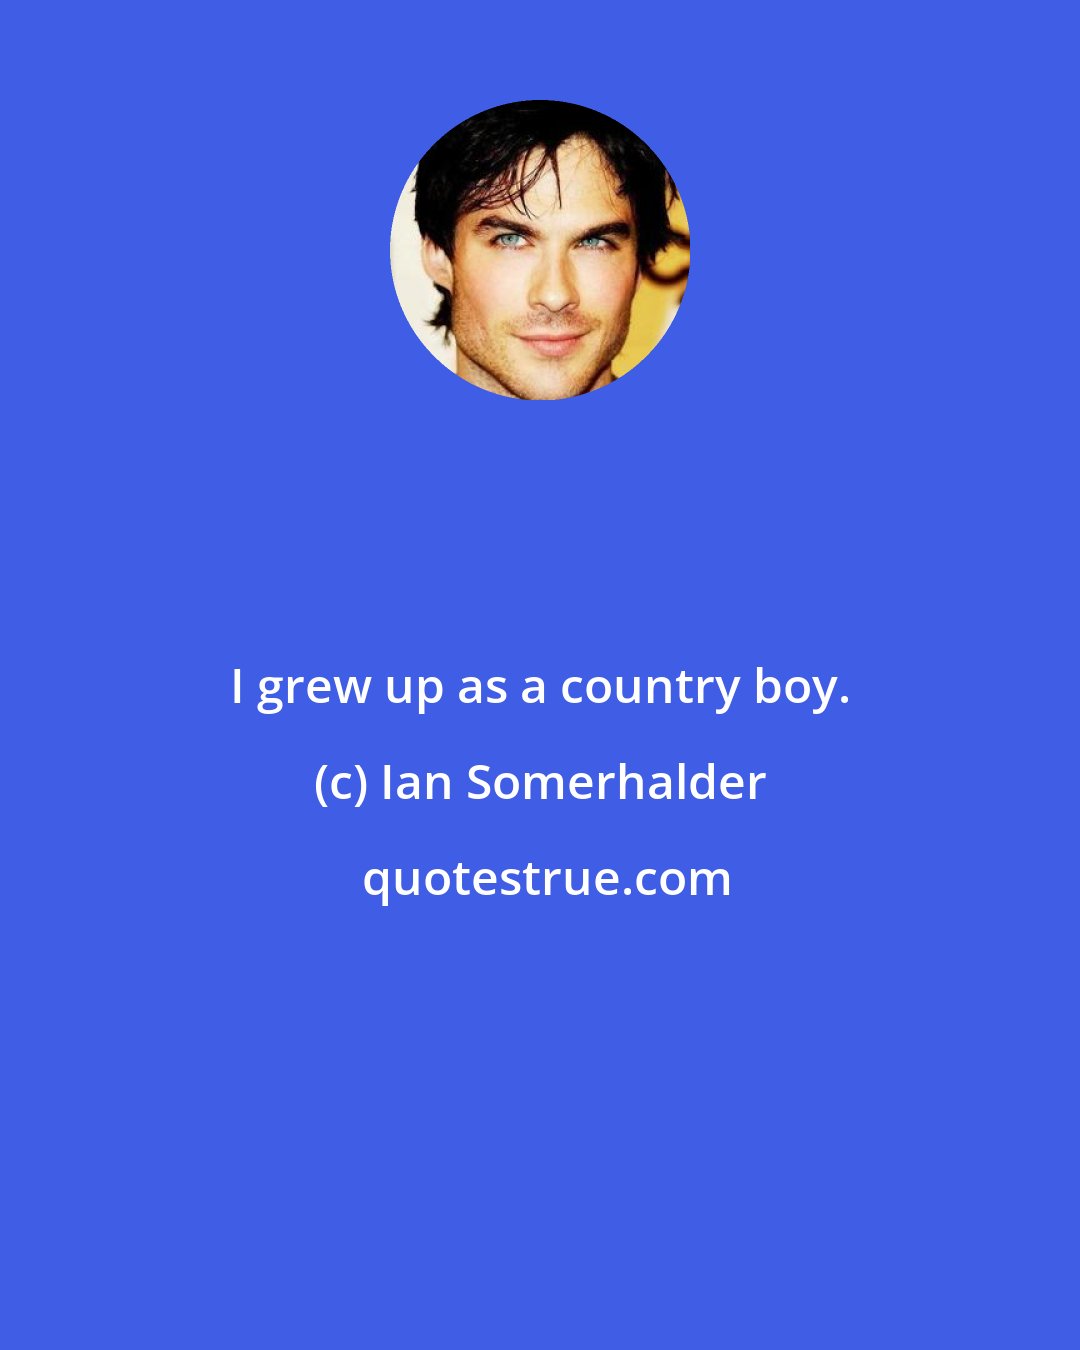 Ian Somerhalder: I grew up as a country boy.